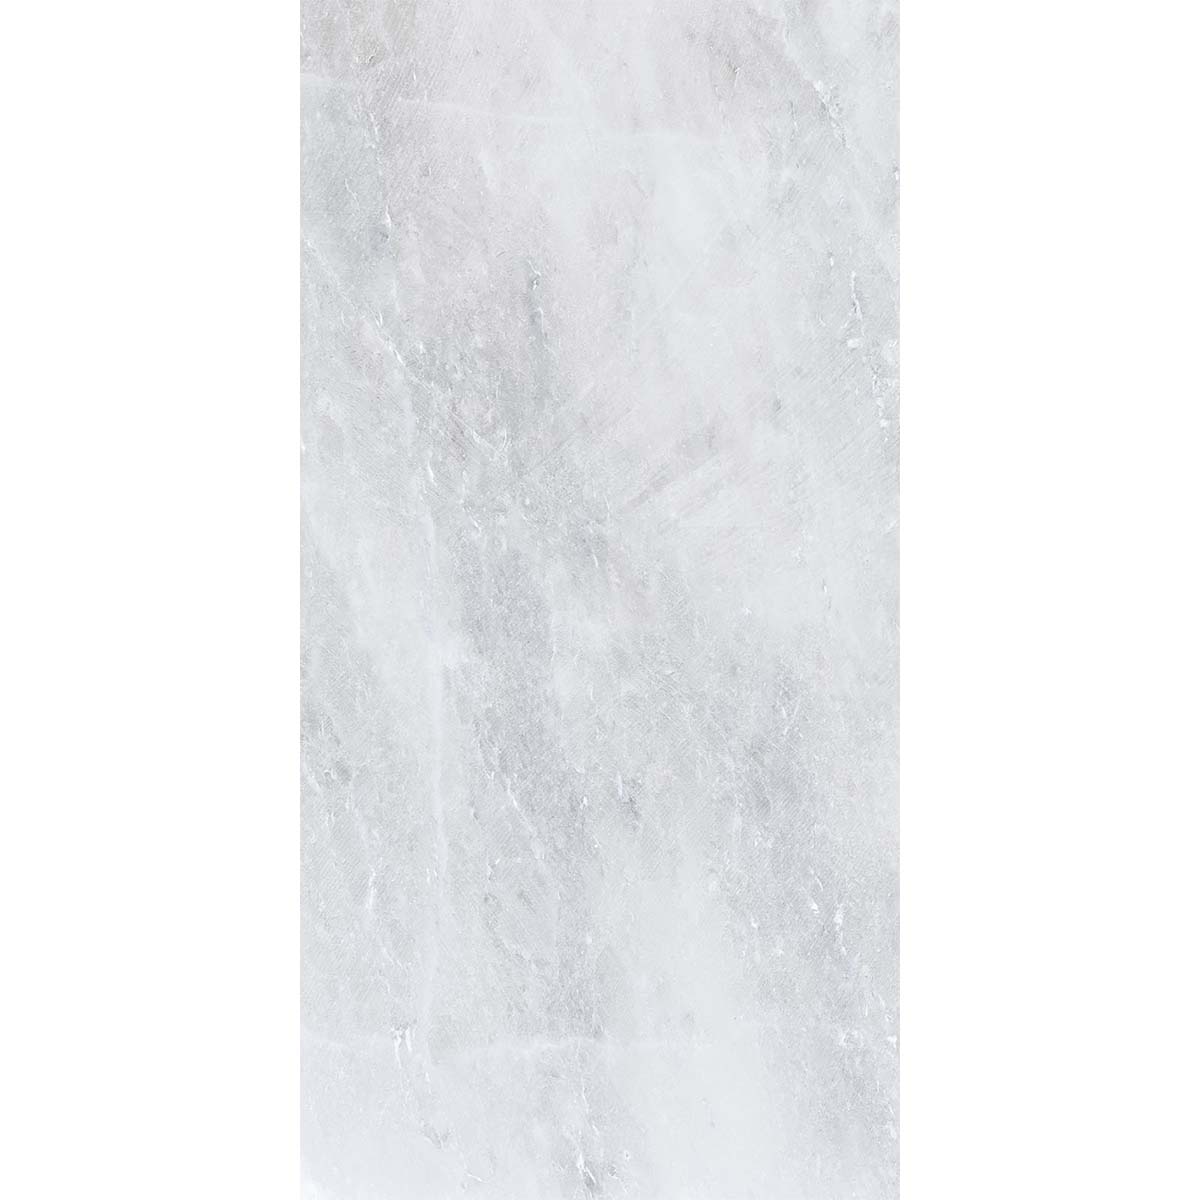 Himalaya White Stone Effect Porcelain Tile 60x120cm